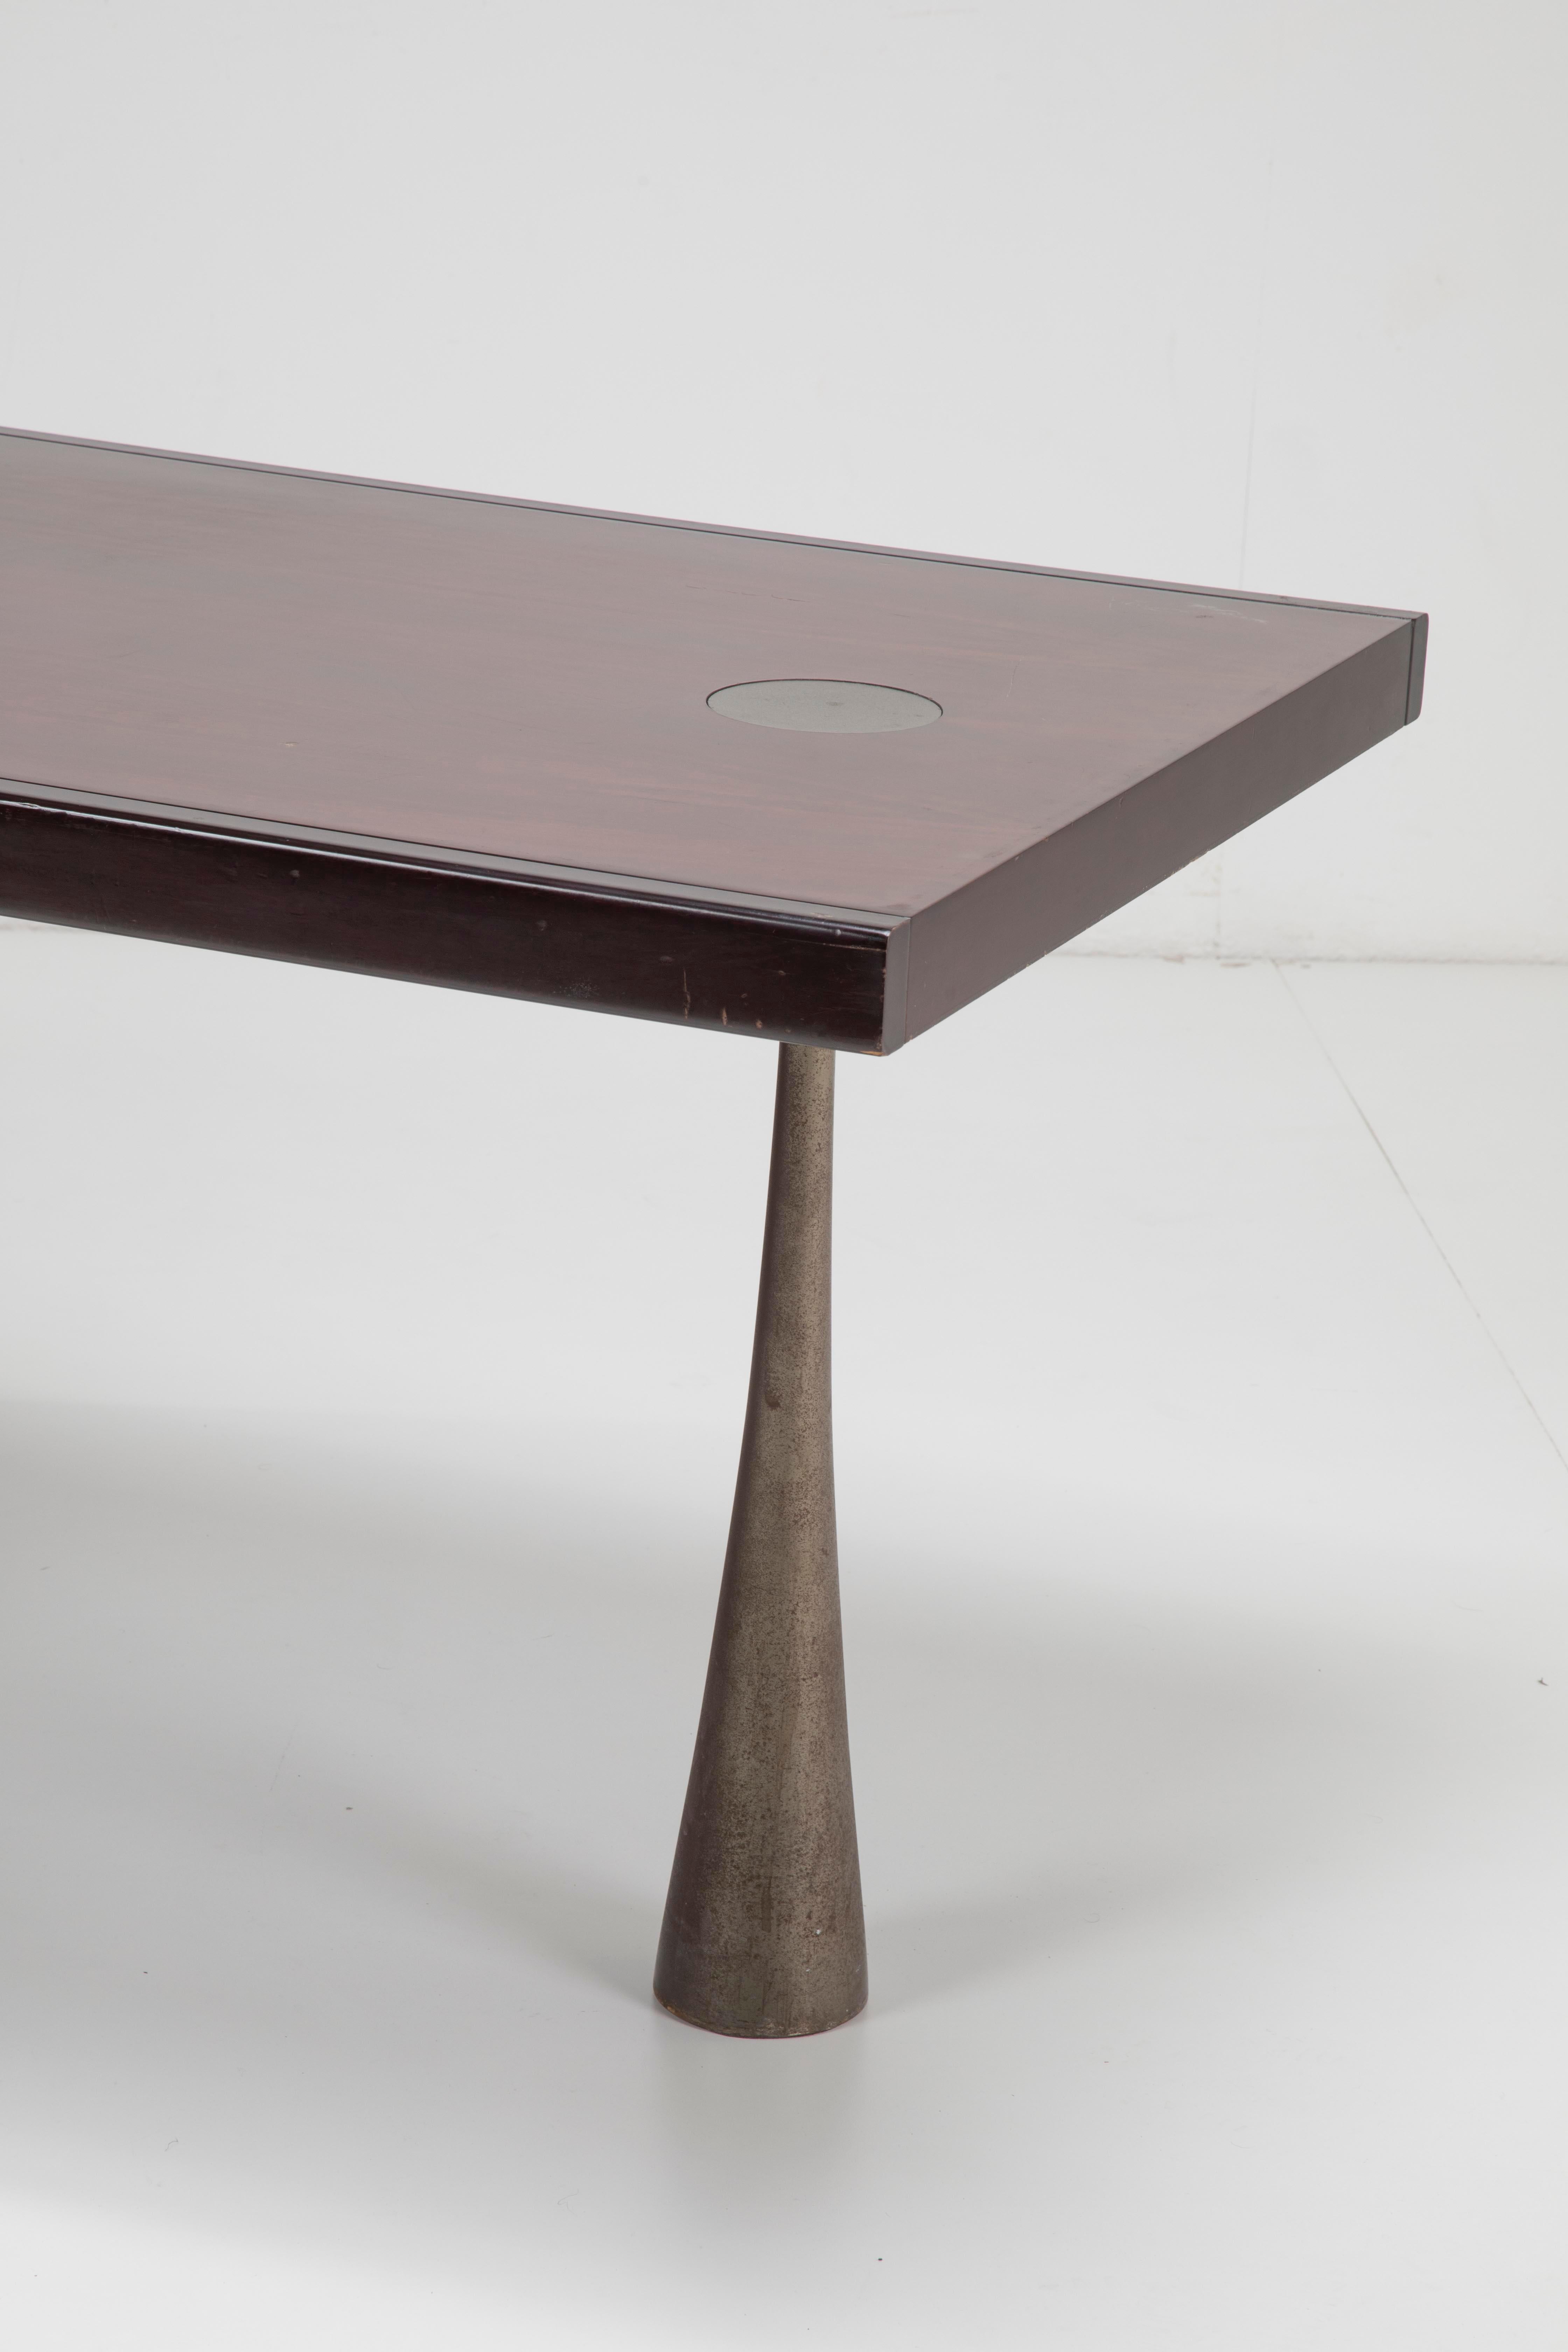 Late 20th Century Angelo Mangiarotti Rare desk with single cast iron foot - Italian Design 1970s